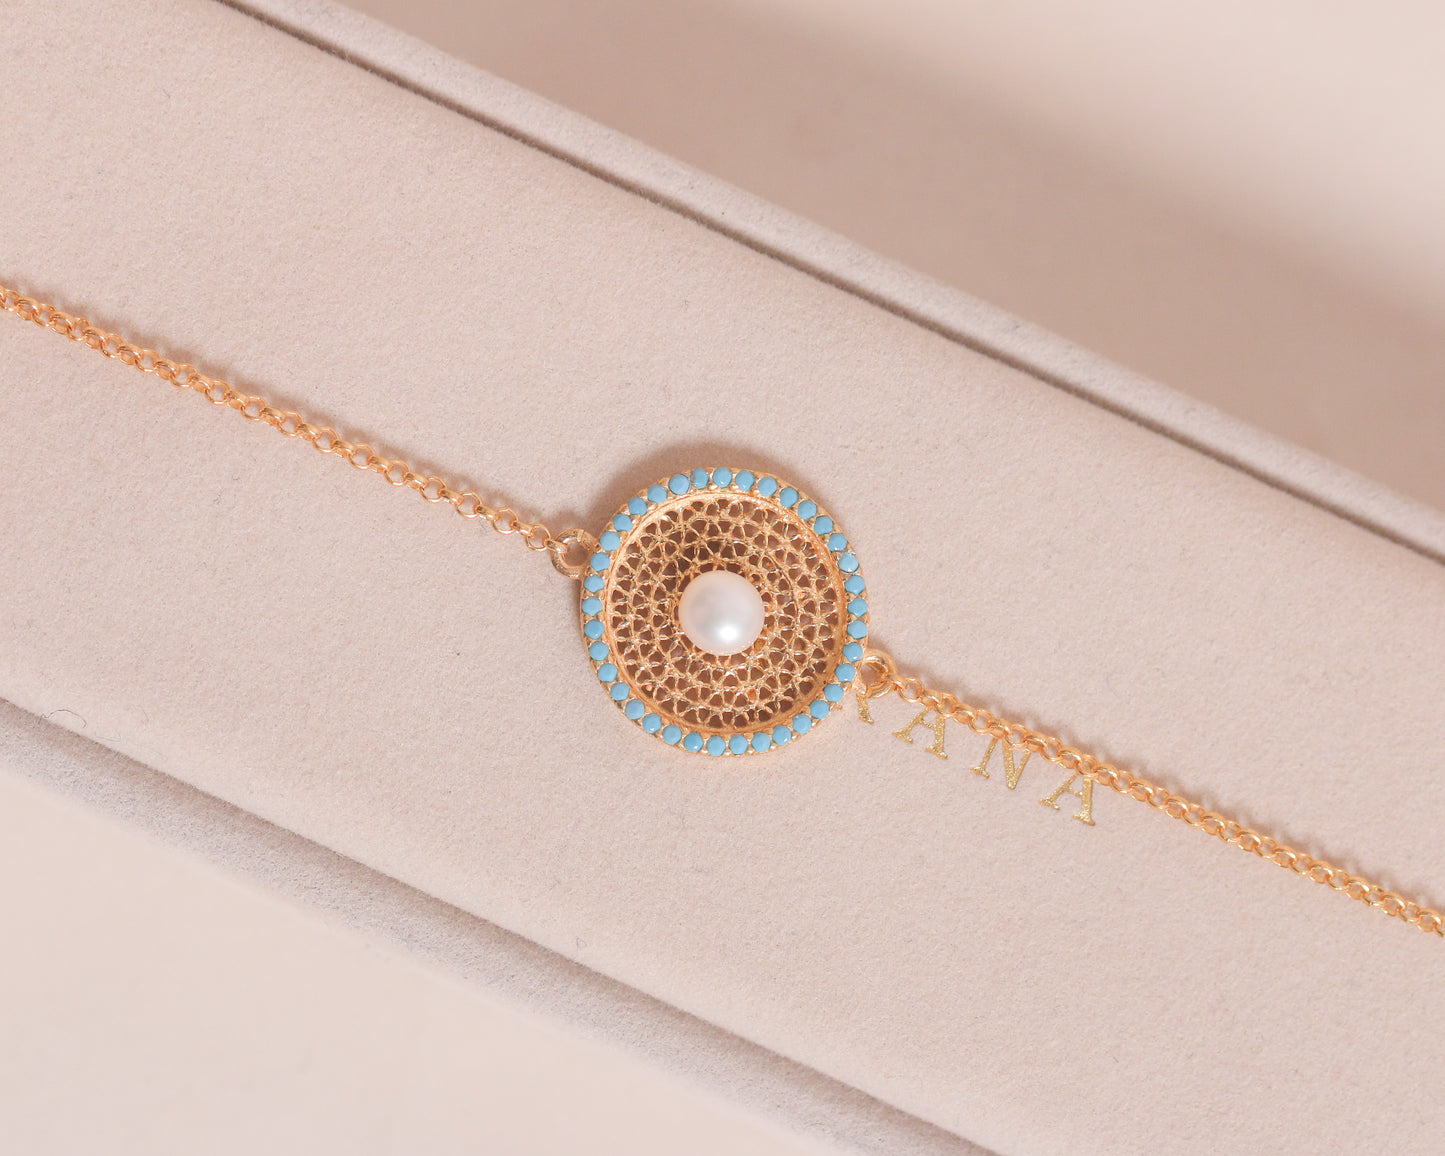 Fairuz & Pearls Filigree Bracelet